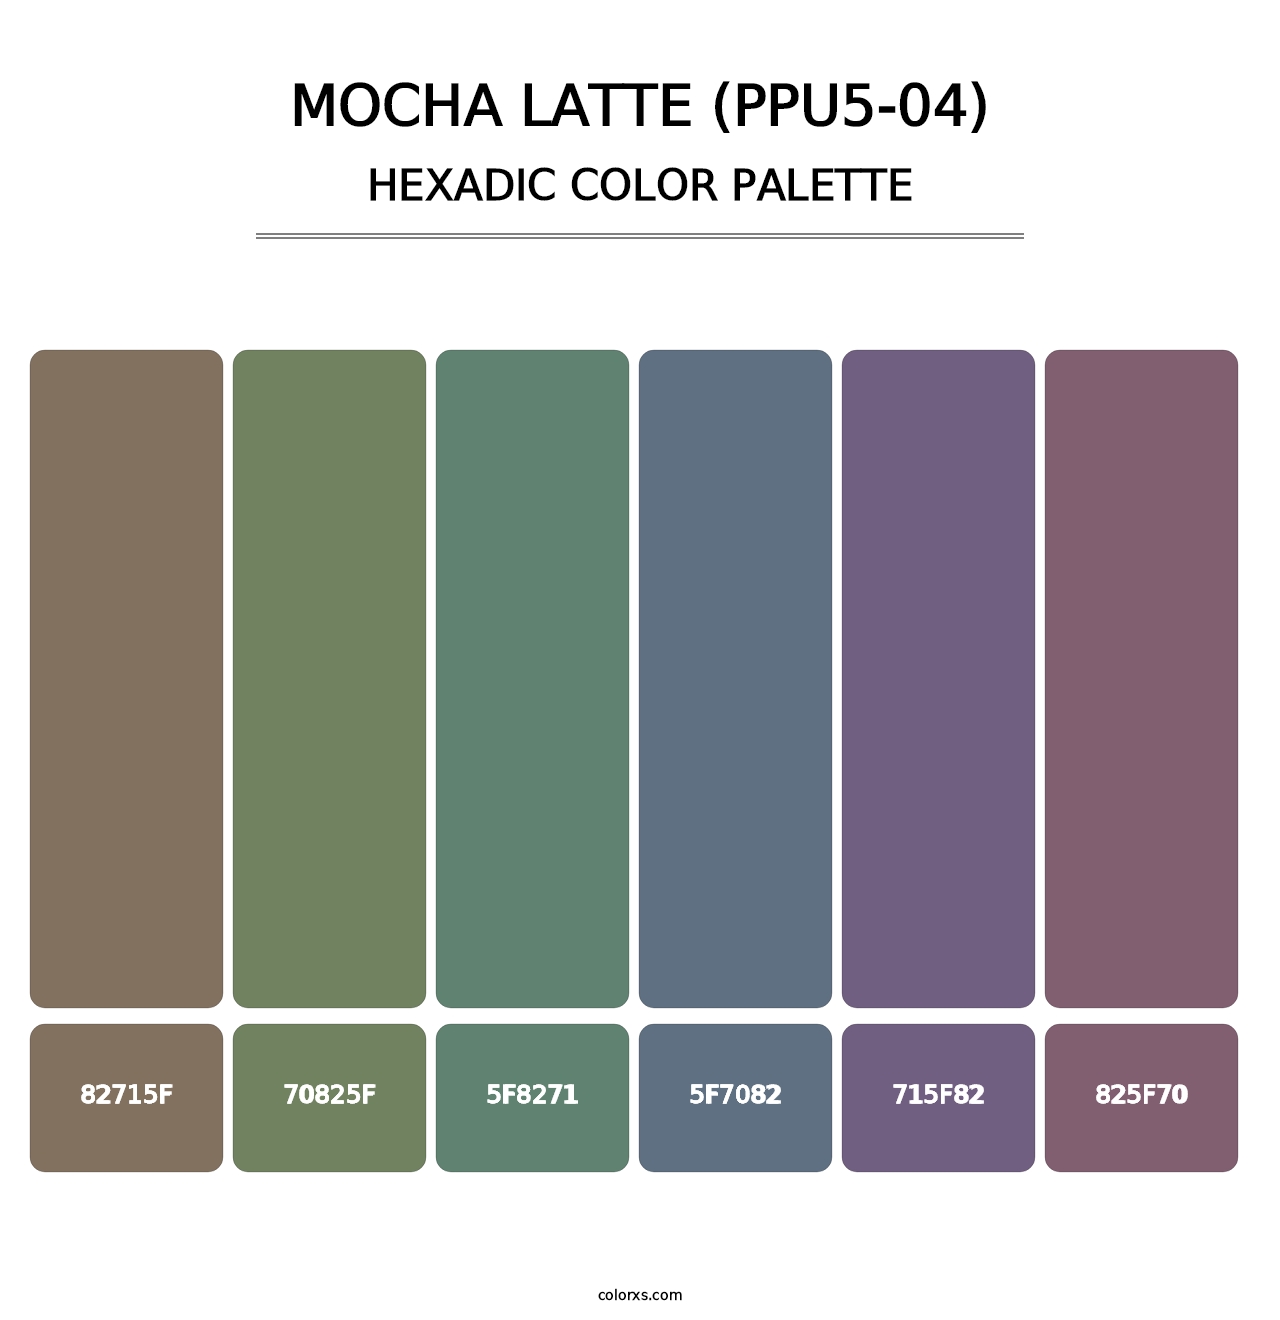 Mocha Latte (PPU5-04) - Hexadic Color Palette